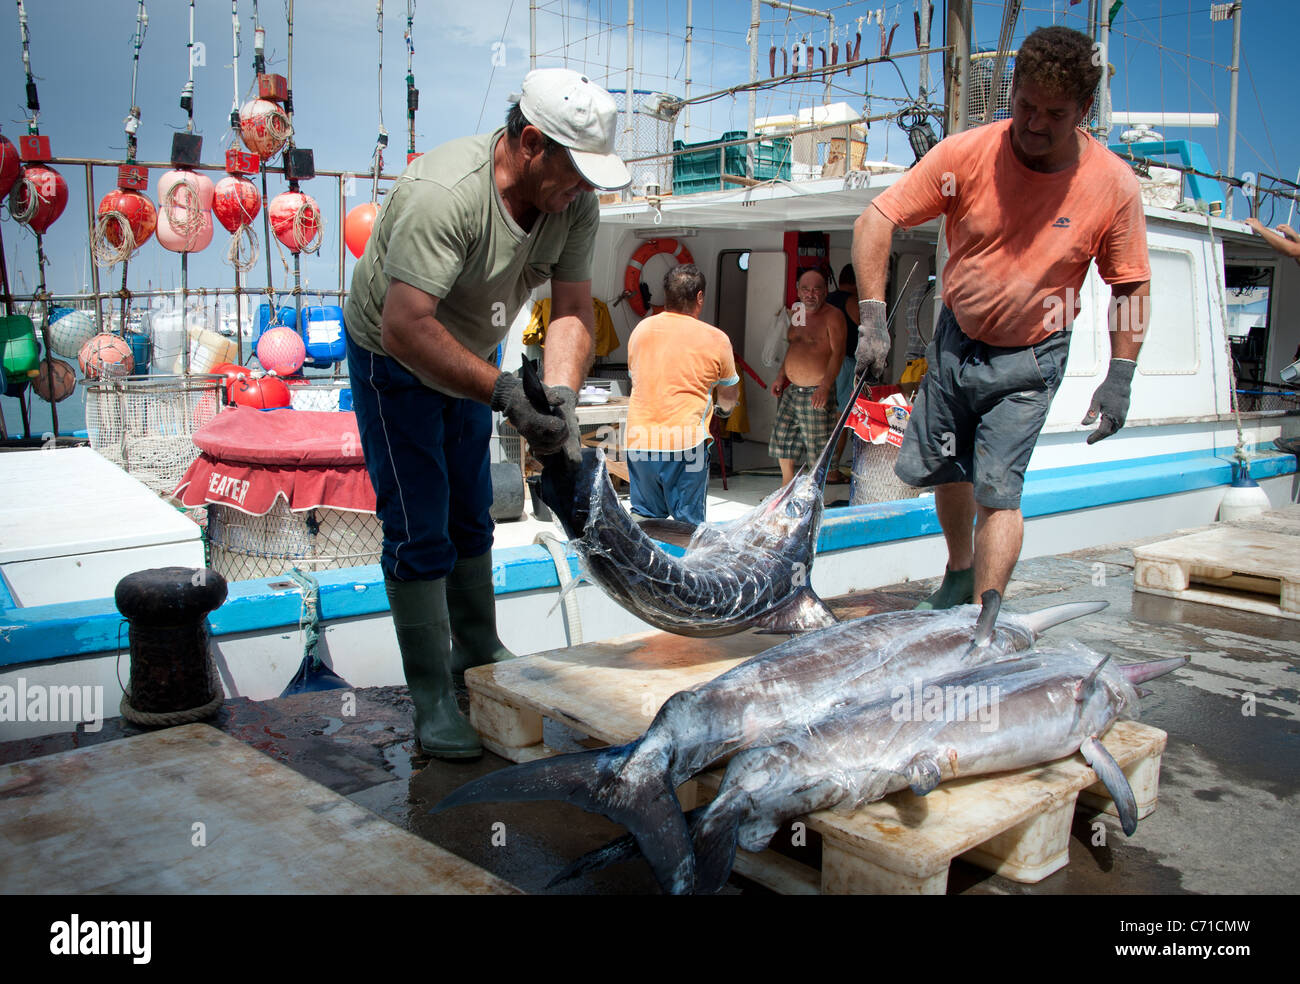 Fishermen unloading swordfish from boat, Garrucha, Spain Stock Photo